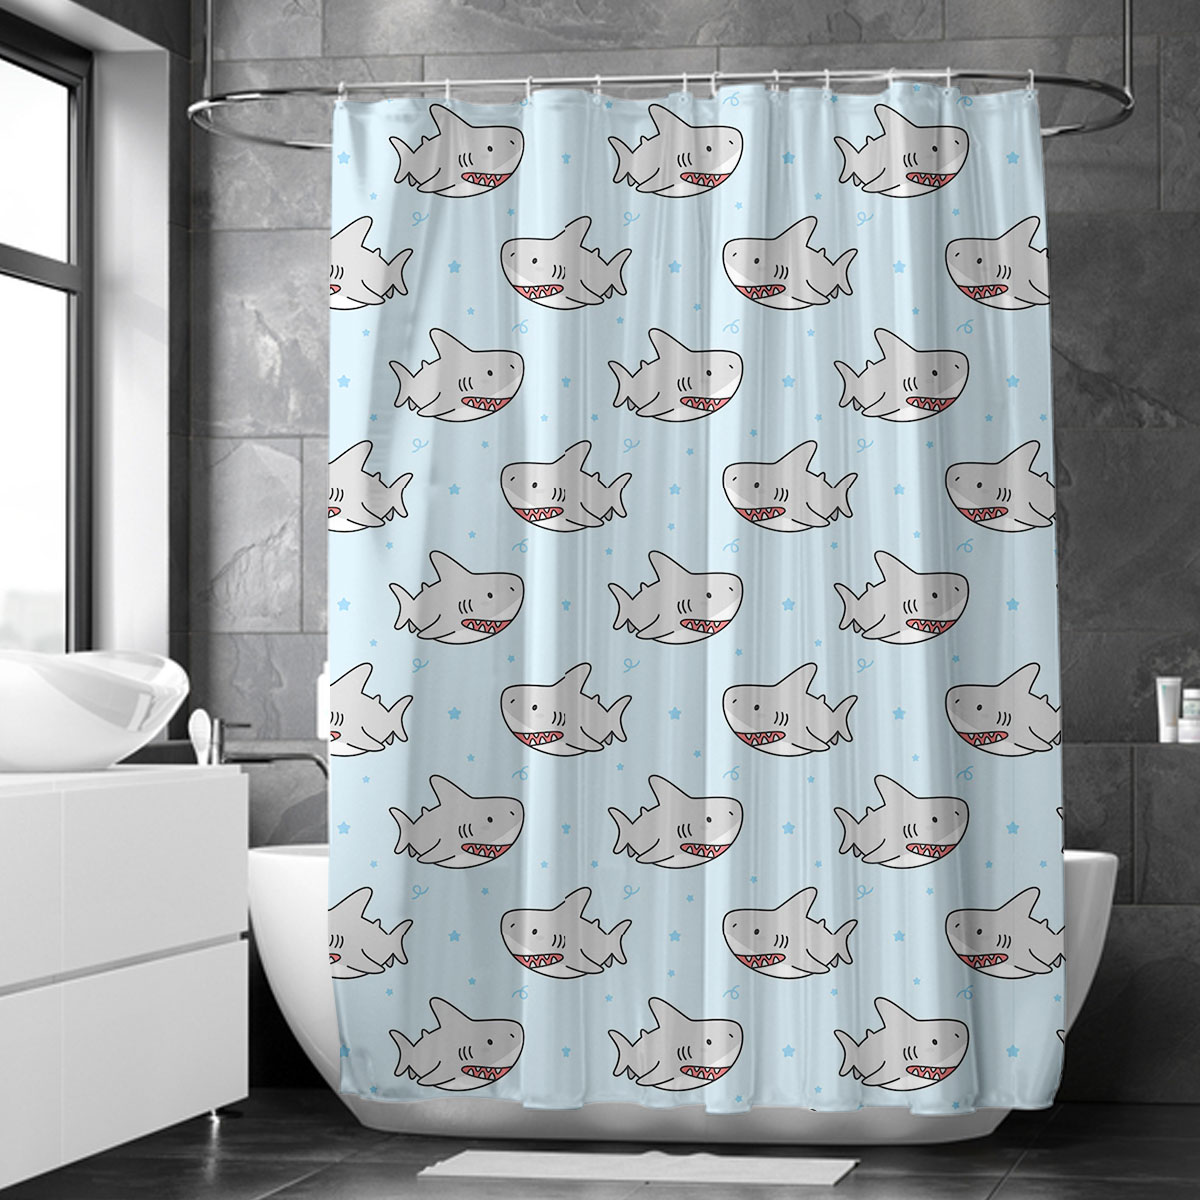 Cartoon Great White Shark Shower Curtain